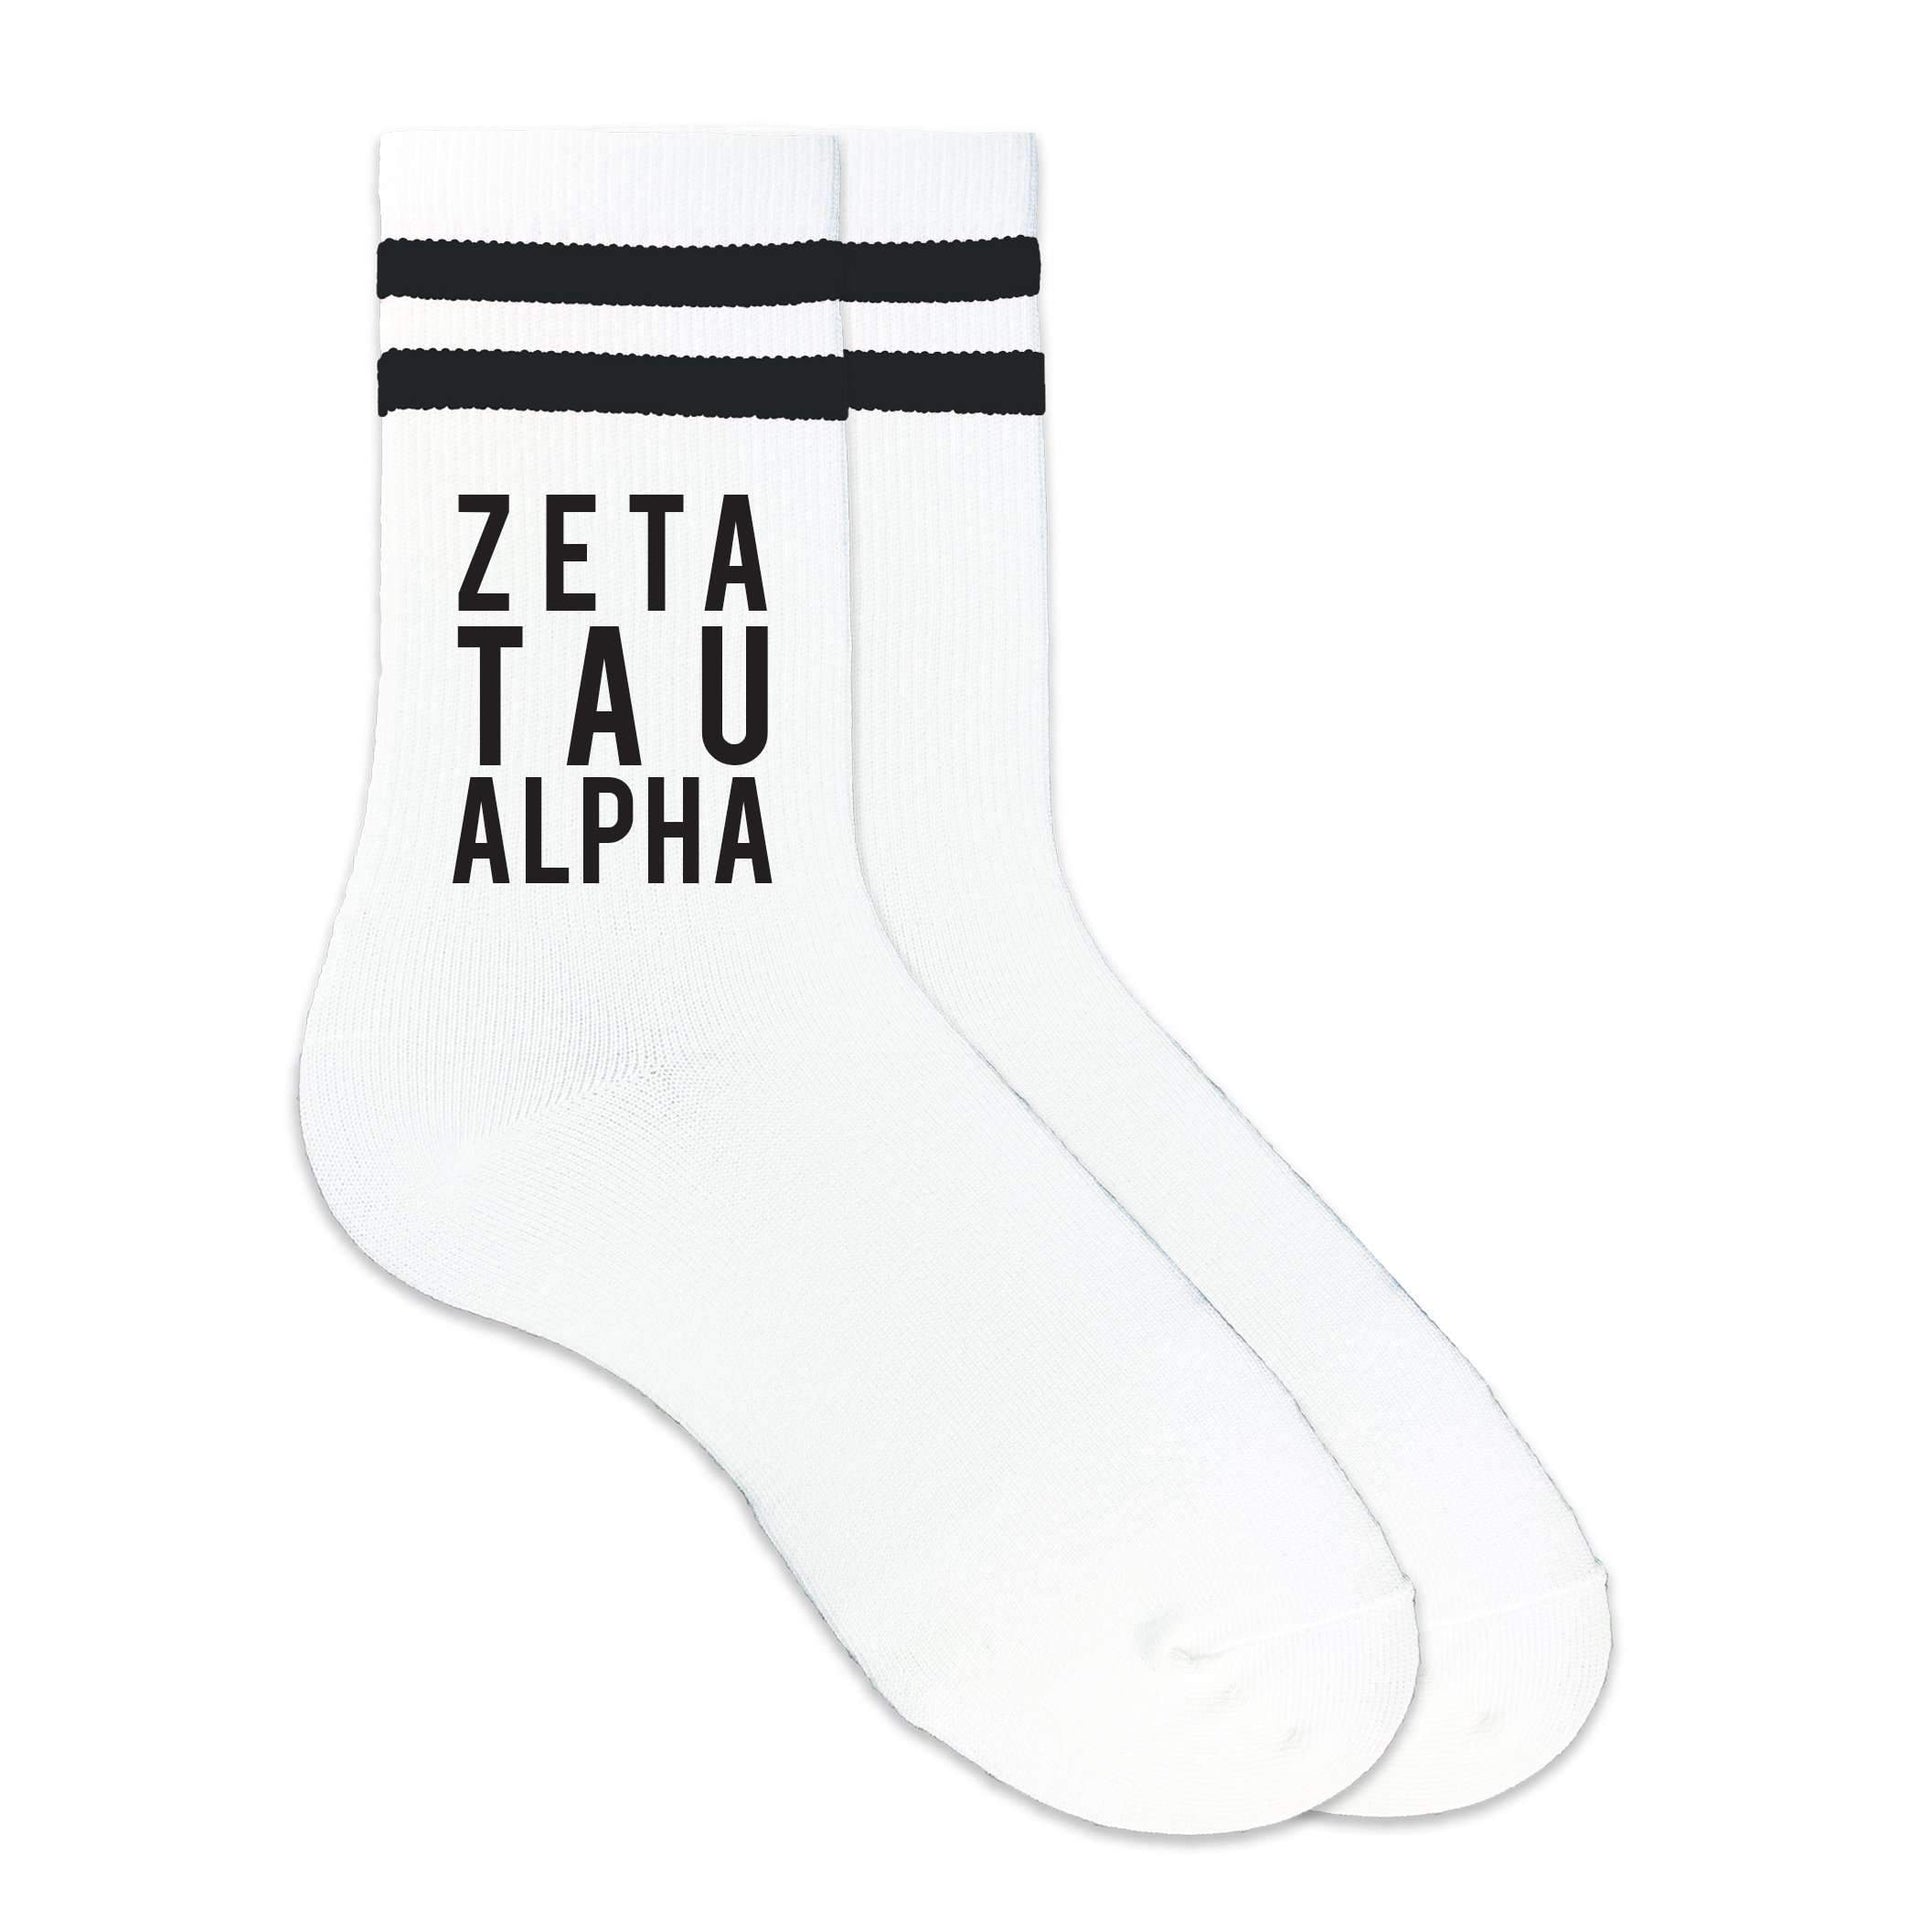 Zeta Tau Alpha sorority name custom printed on black striped crew socks